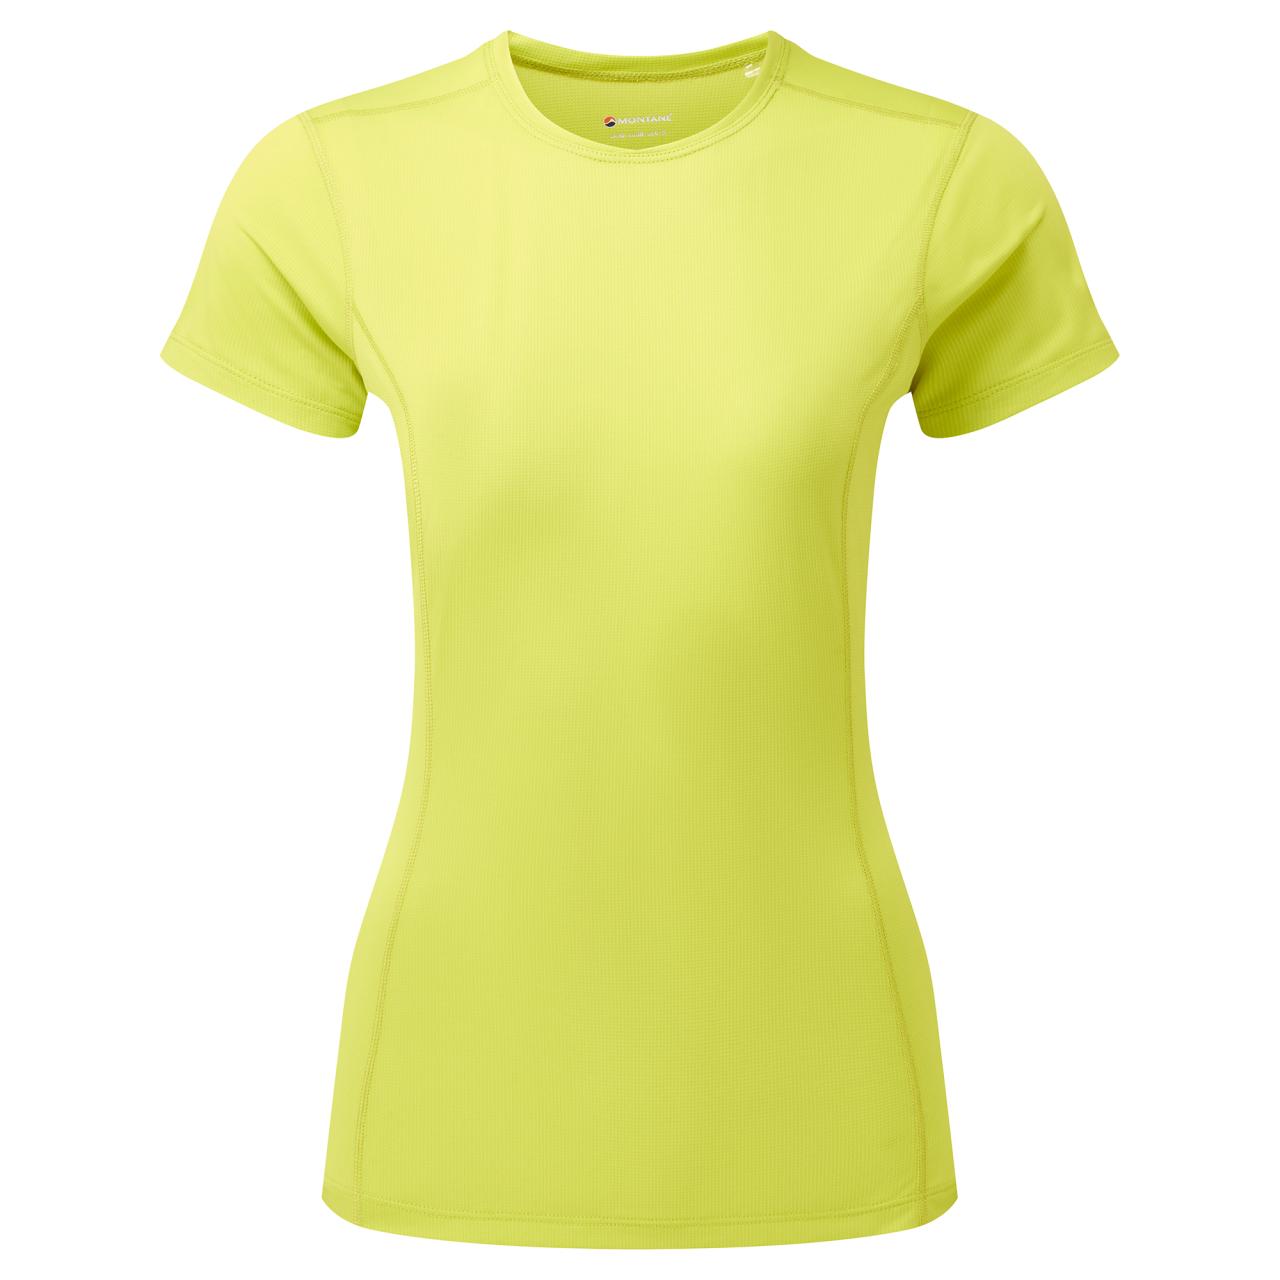 FEM DART LITE T-SHIRT-CITRUS SPRING-UK10/S dámské triko žlutozelené